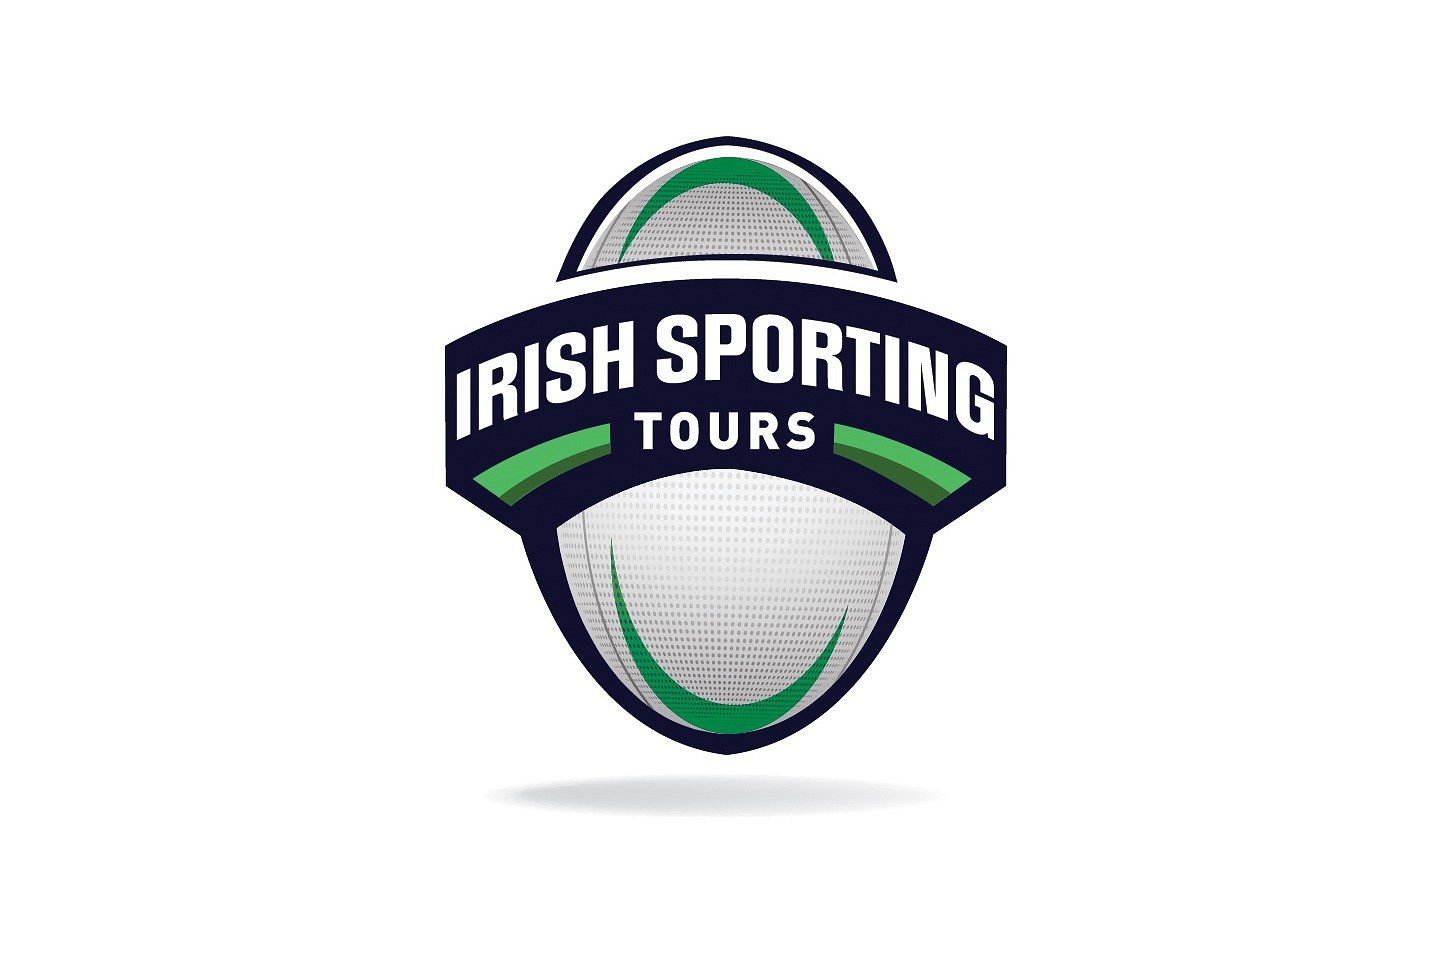 irish rugby & sporting tours